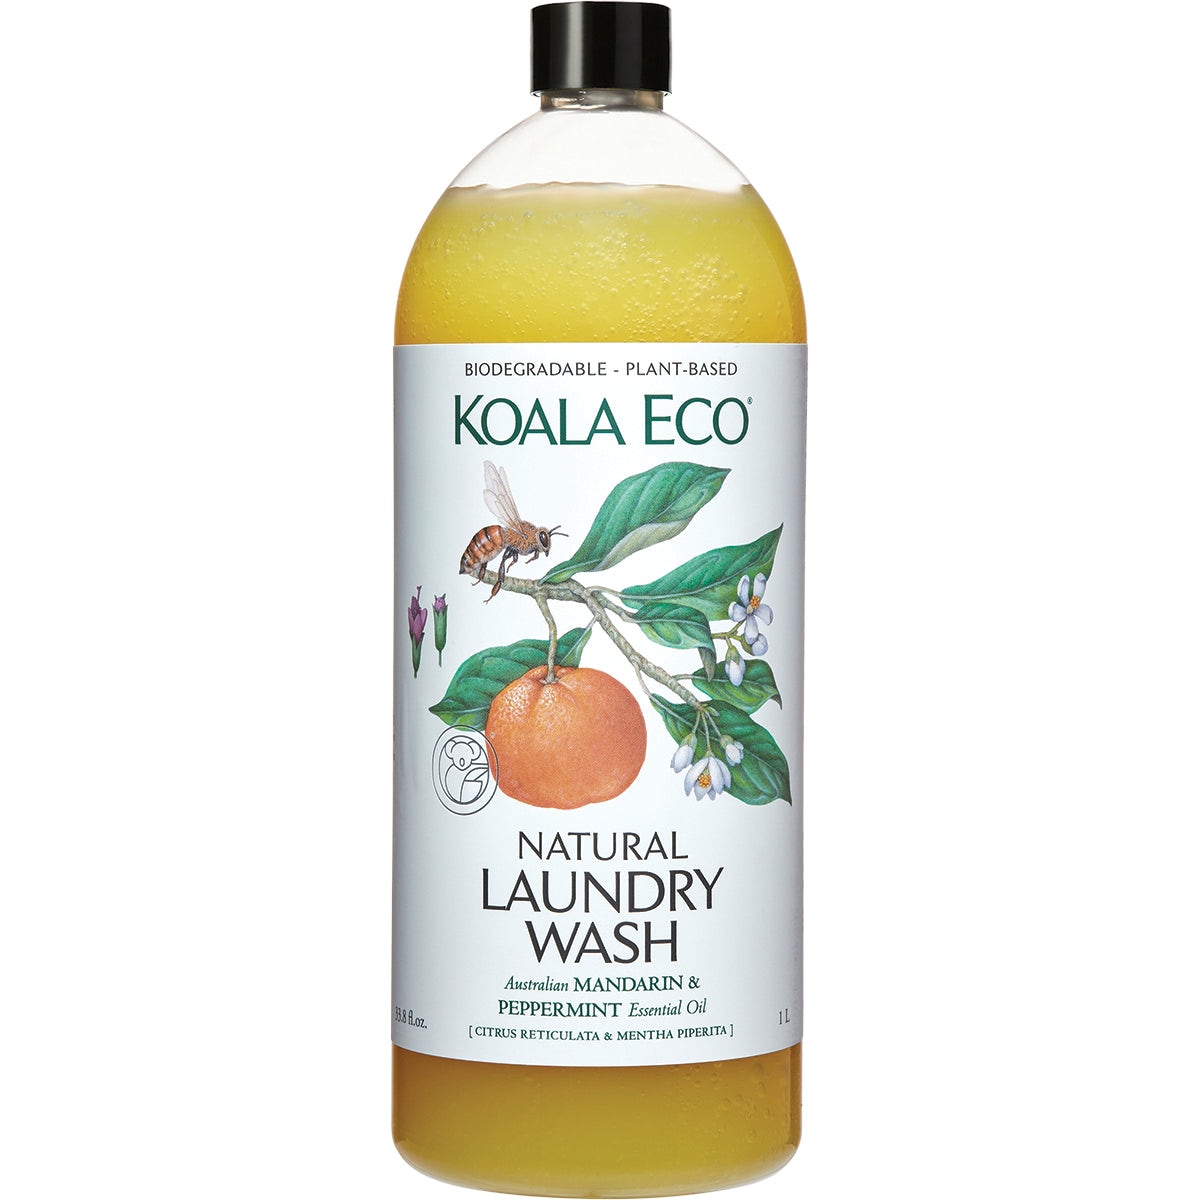 Koala Eco Natural Laundry Wash